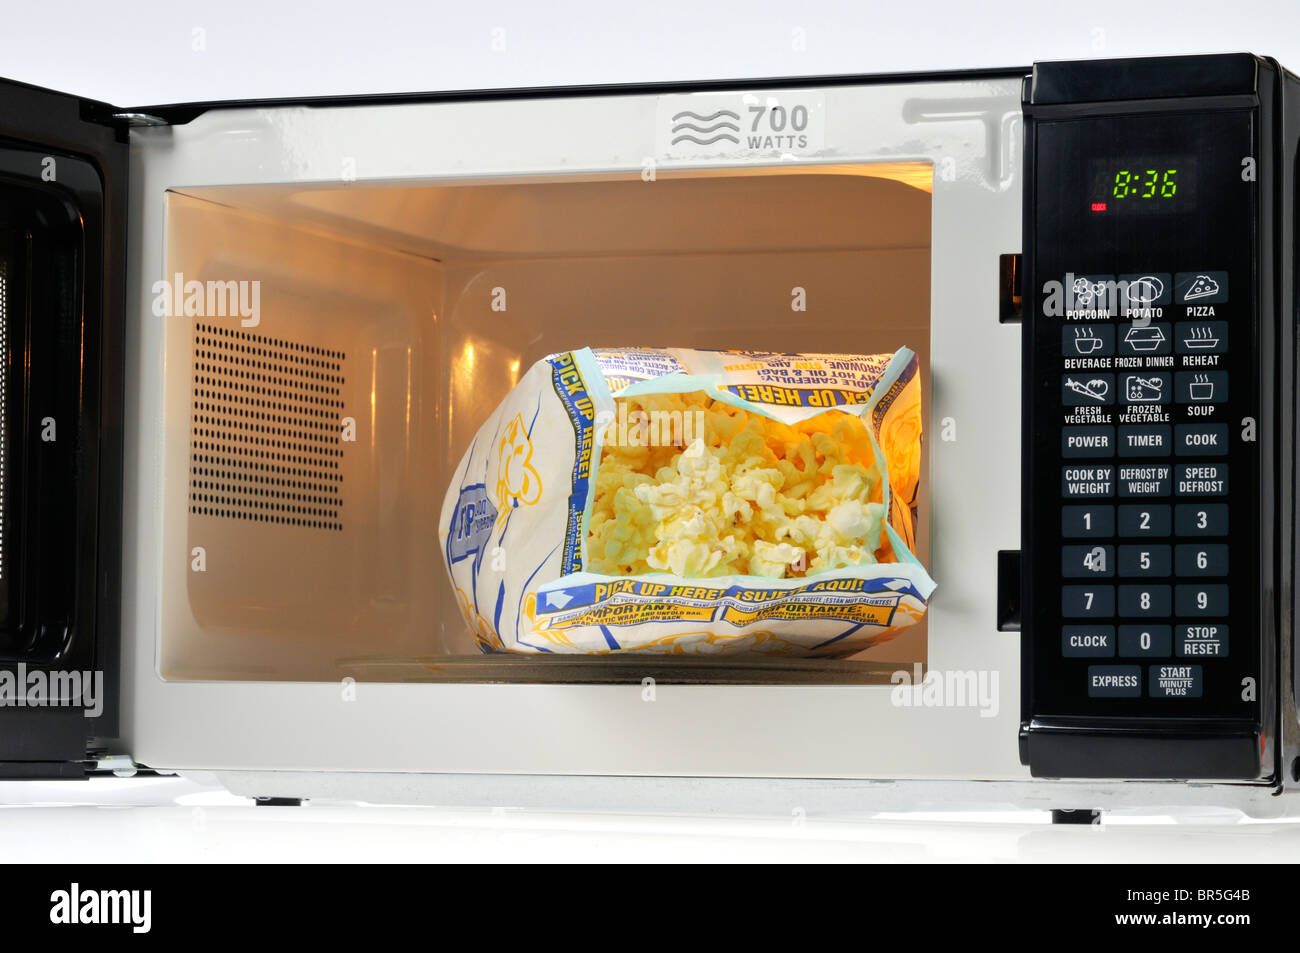 open-bag-of-pop-secret-microwave-popcorn-in-microwave-oven-usa-BR5G4B.jpg